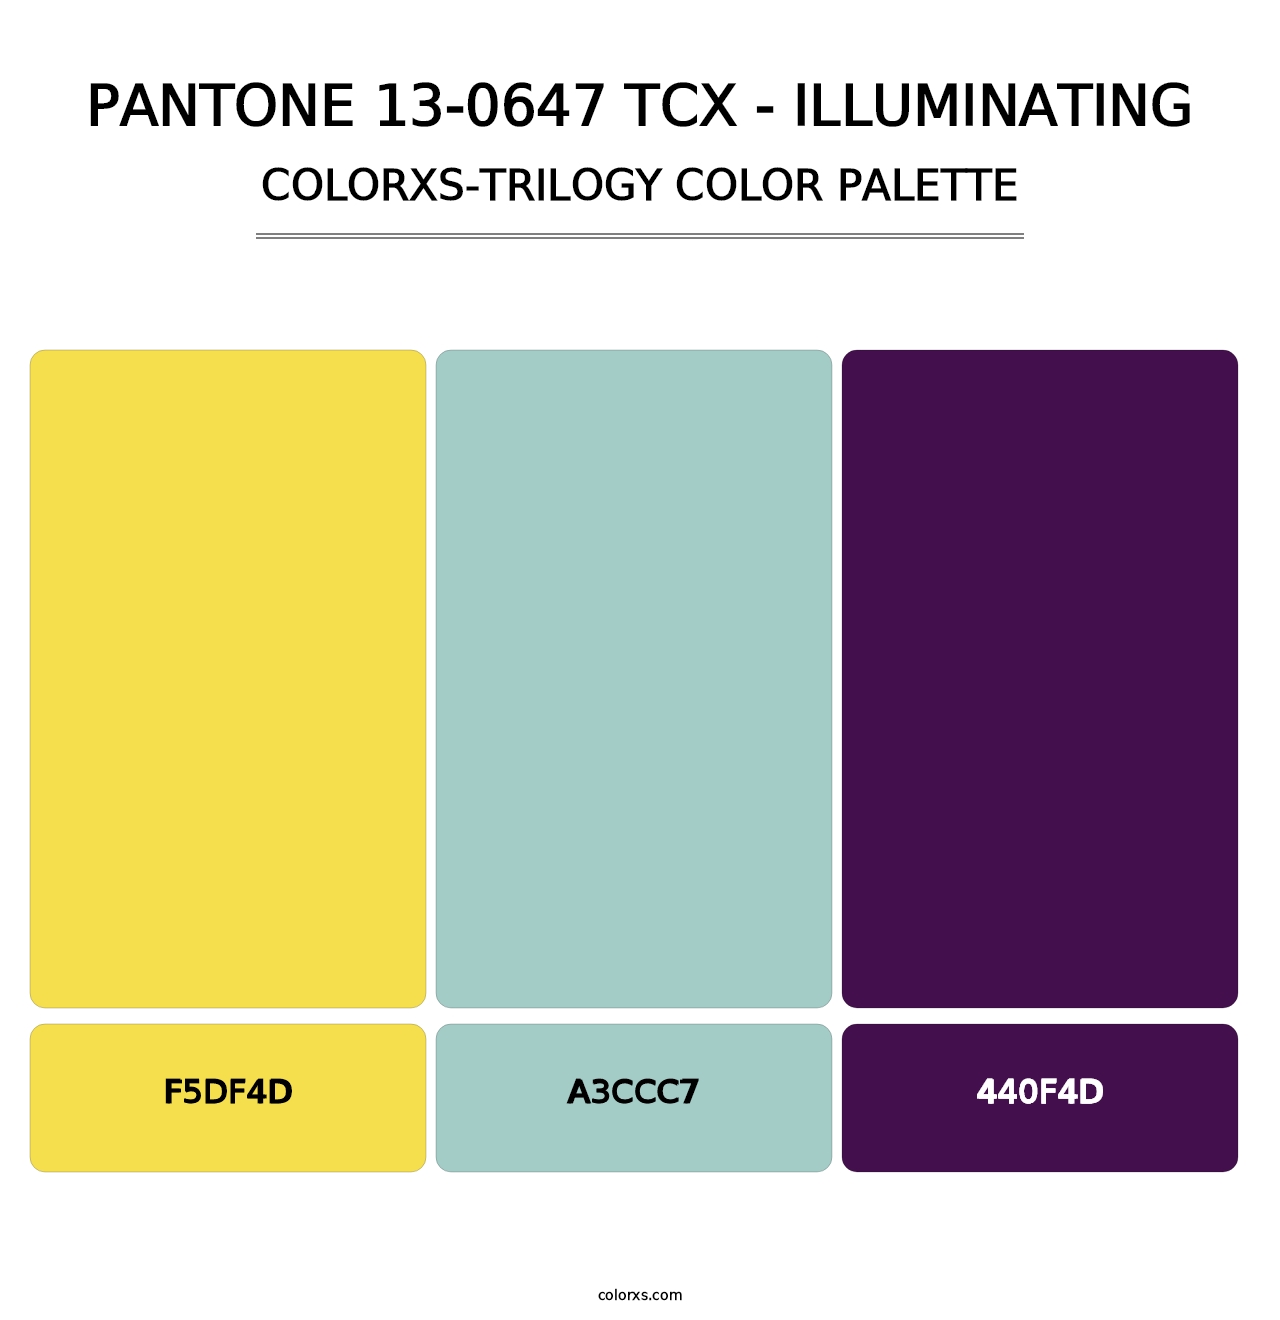 PANTONE 13-0647 TCX - Illuminating - Colorxs Trilogy Palette